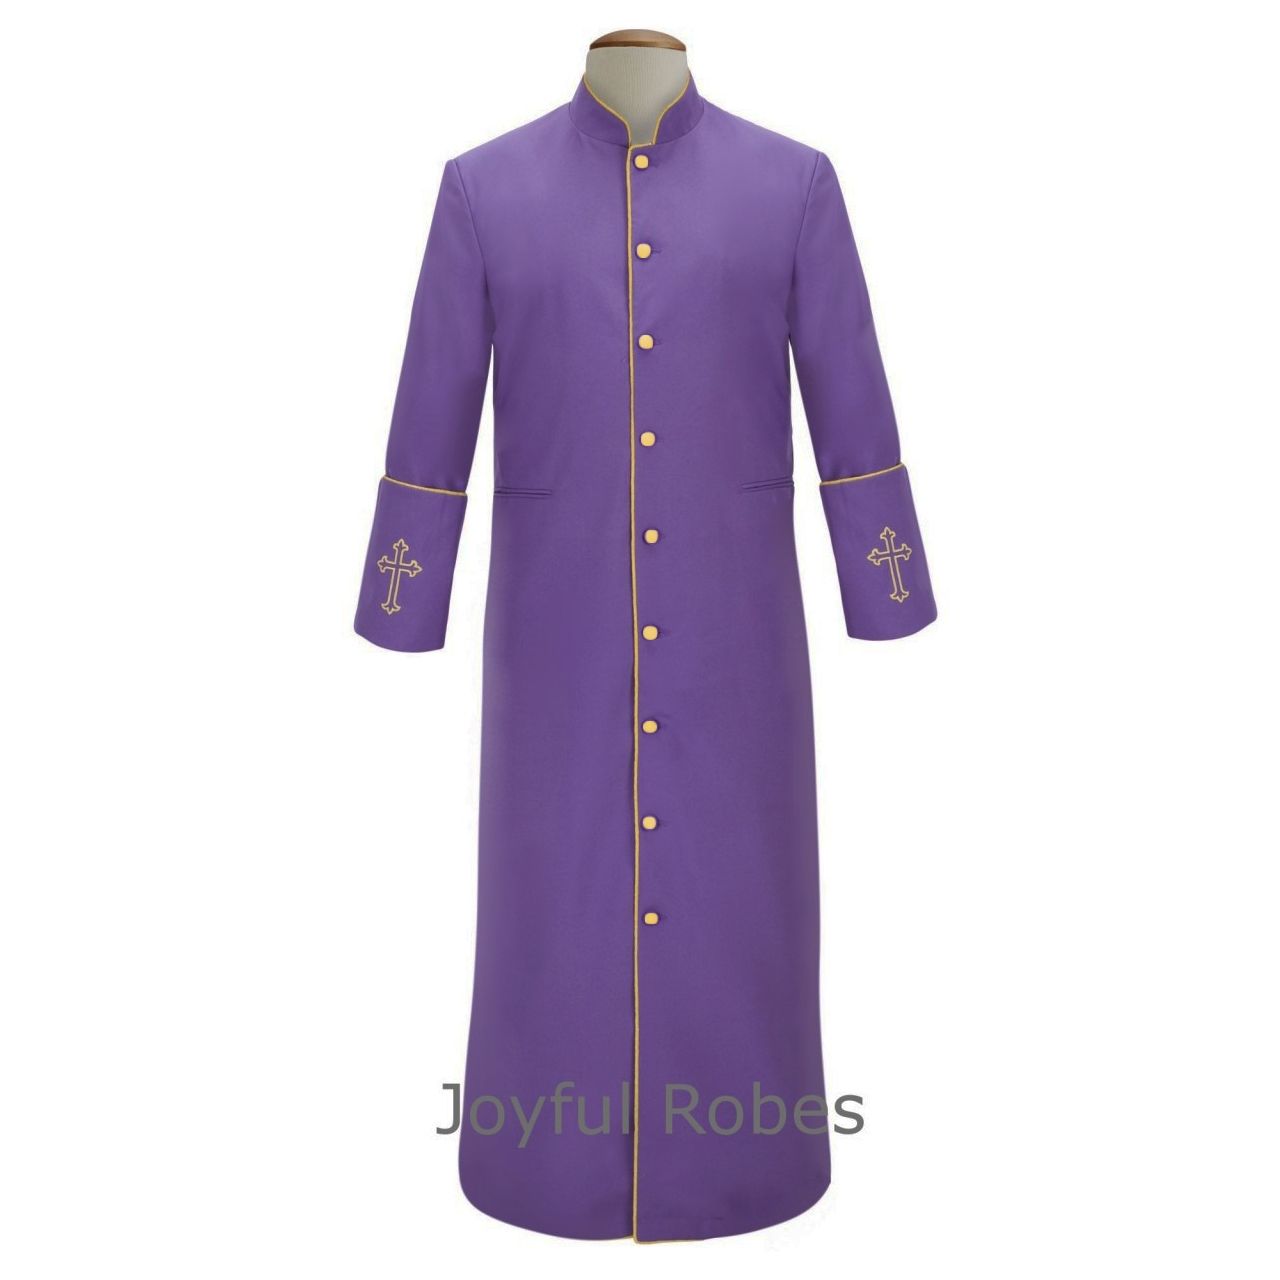 207 M. Men's Clergy/Pastor Robe Purple/Gold Design